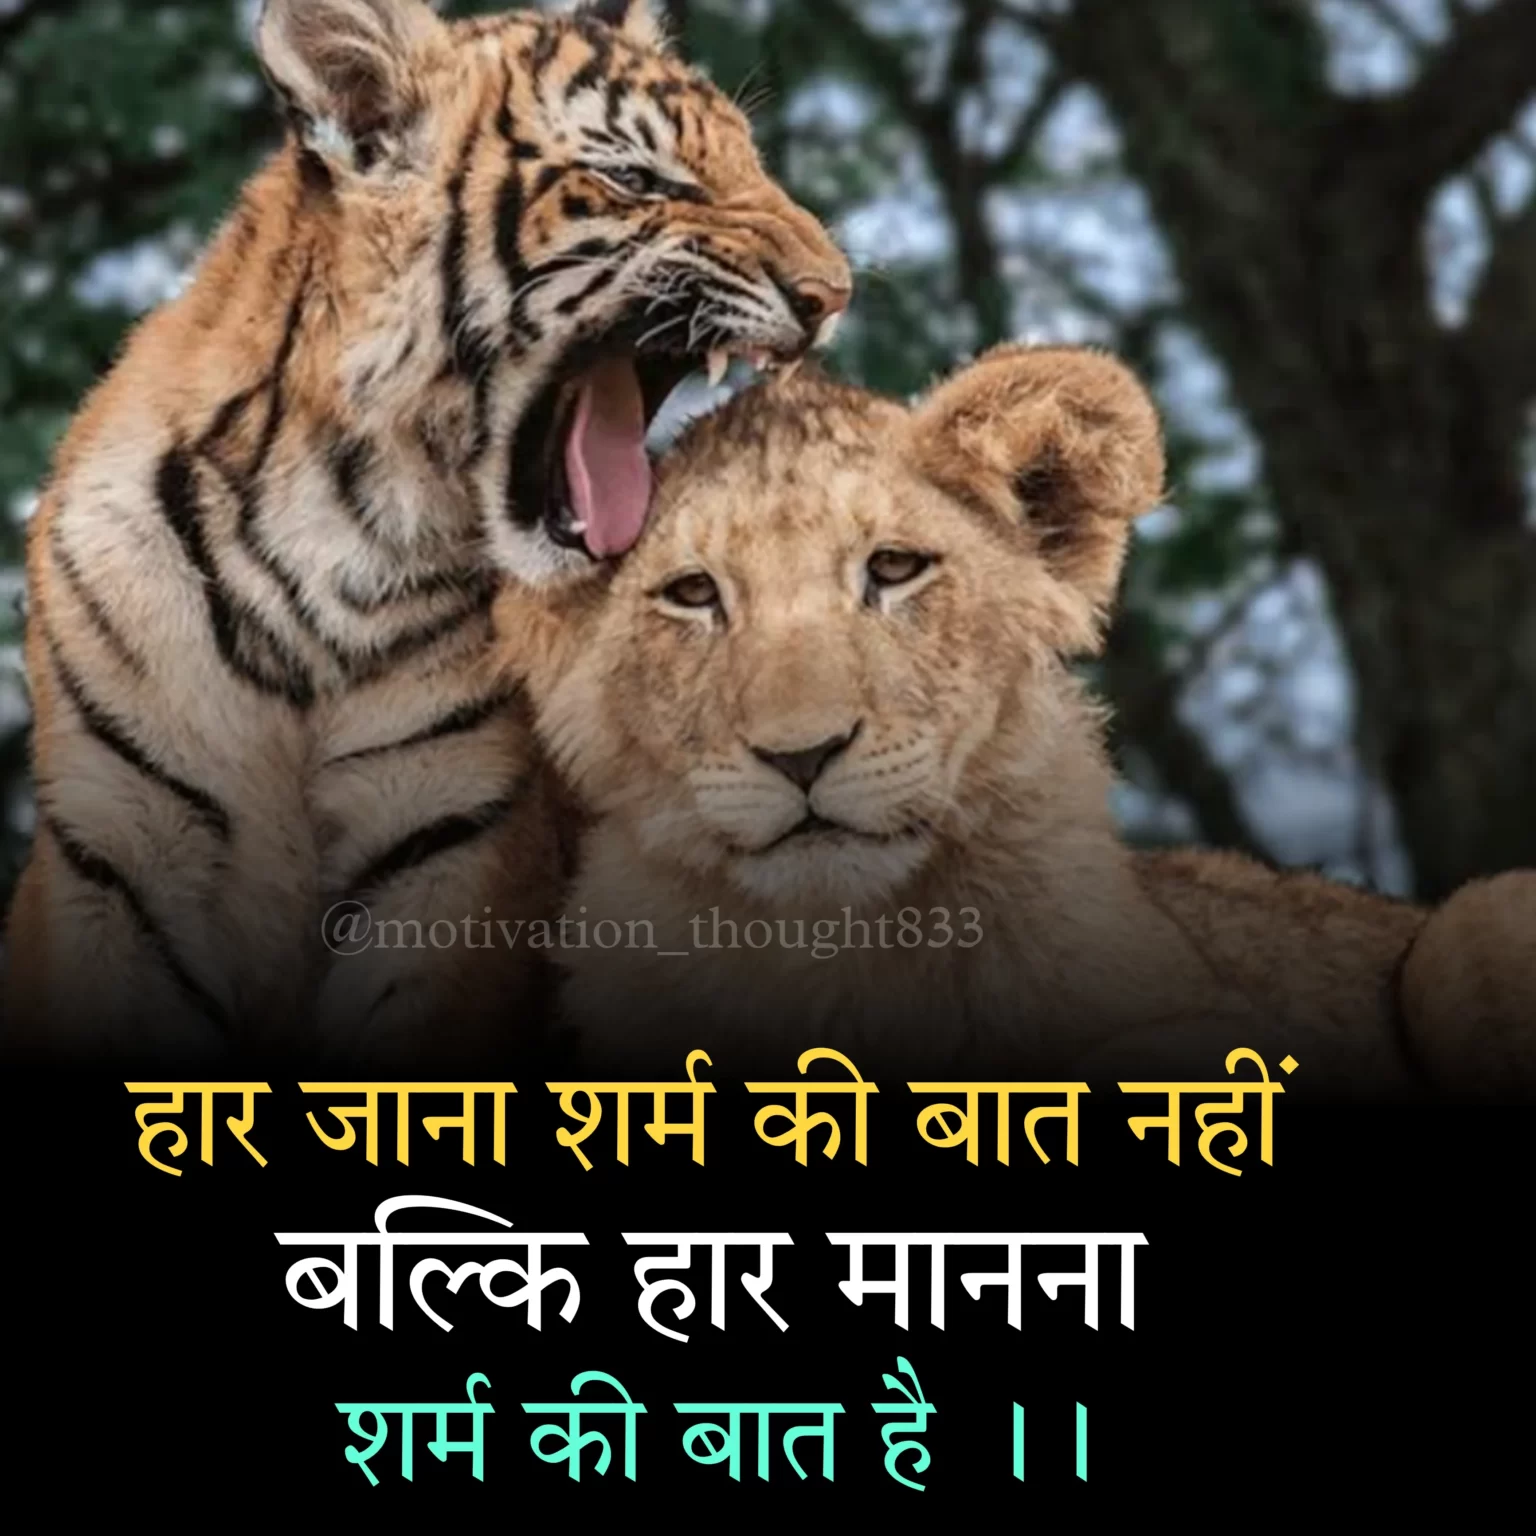 struggle motivational quotes in hindi - 1